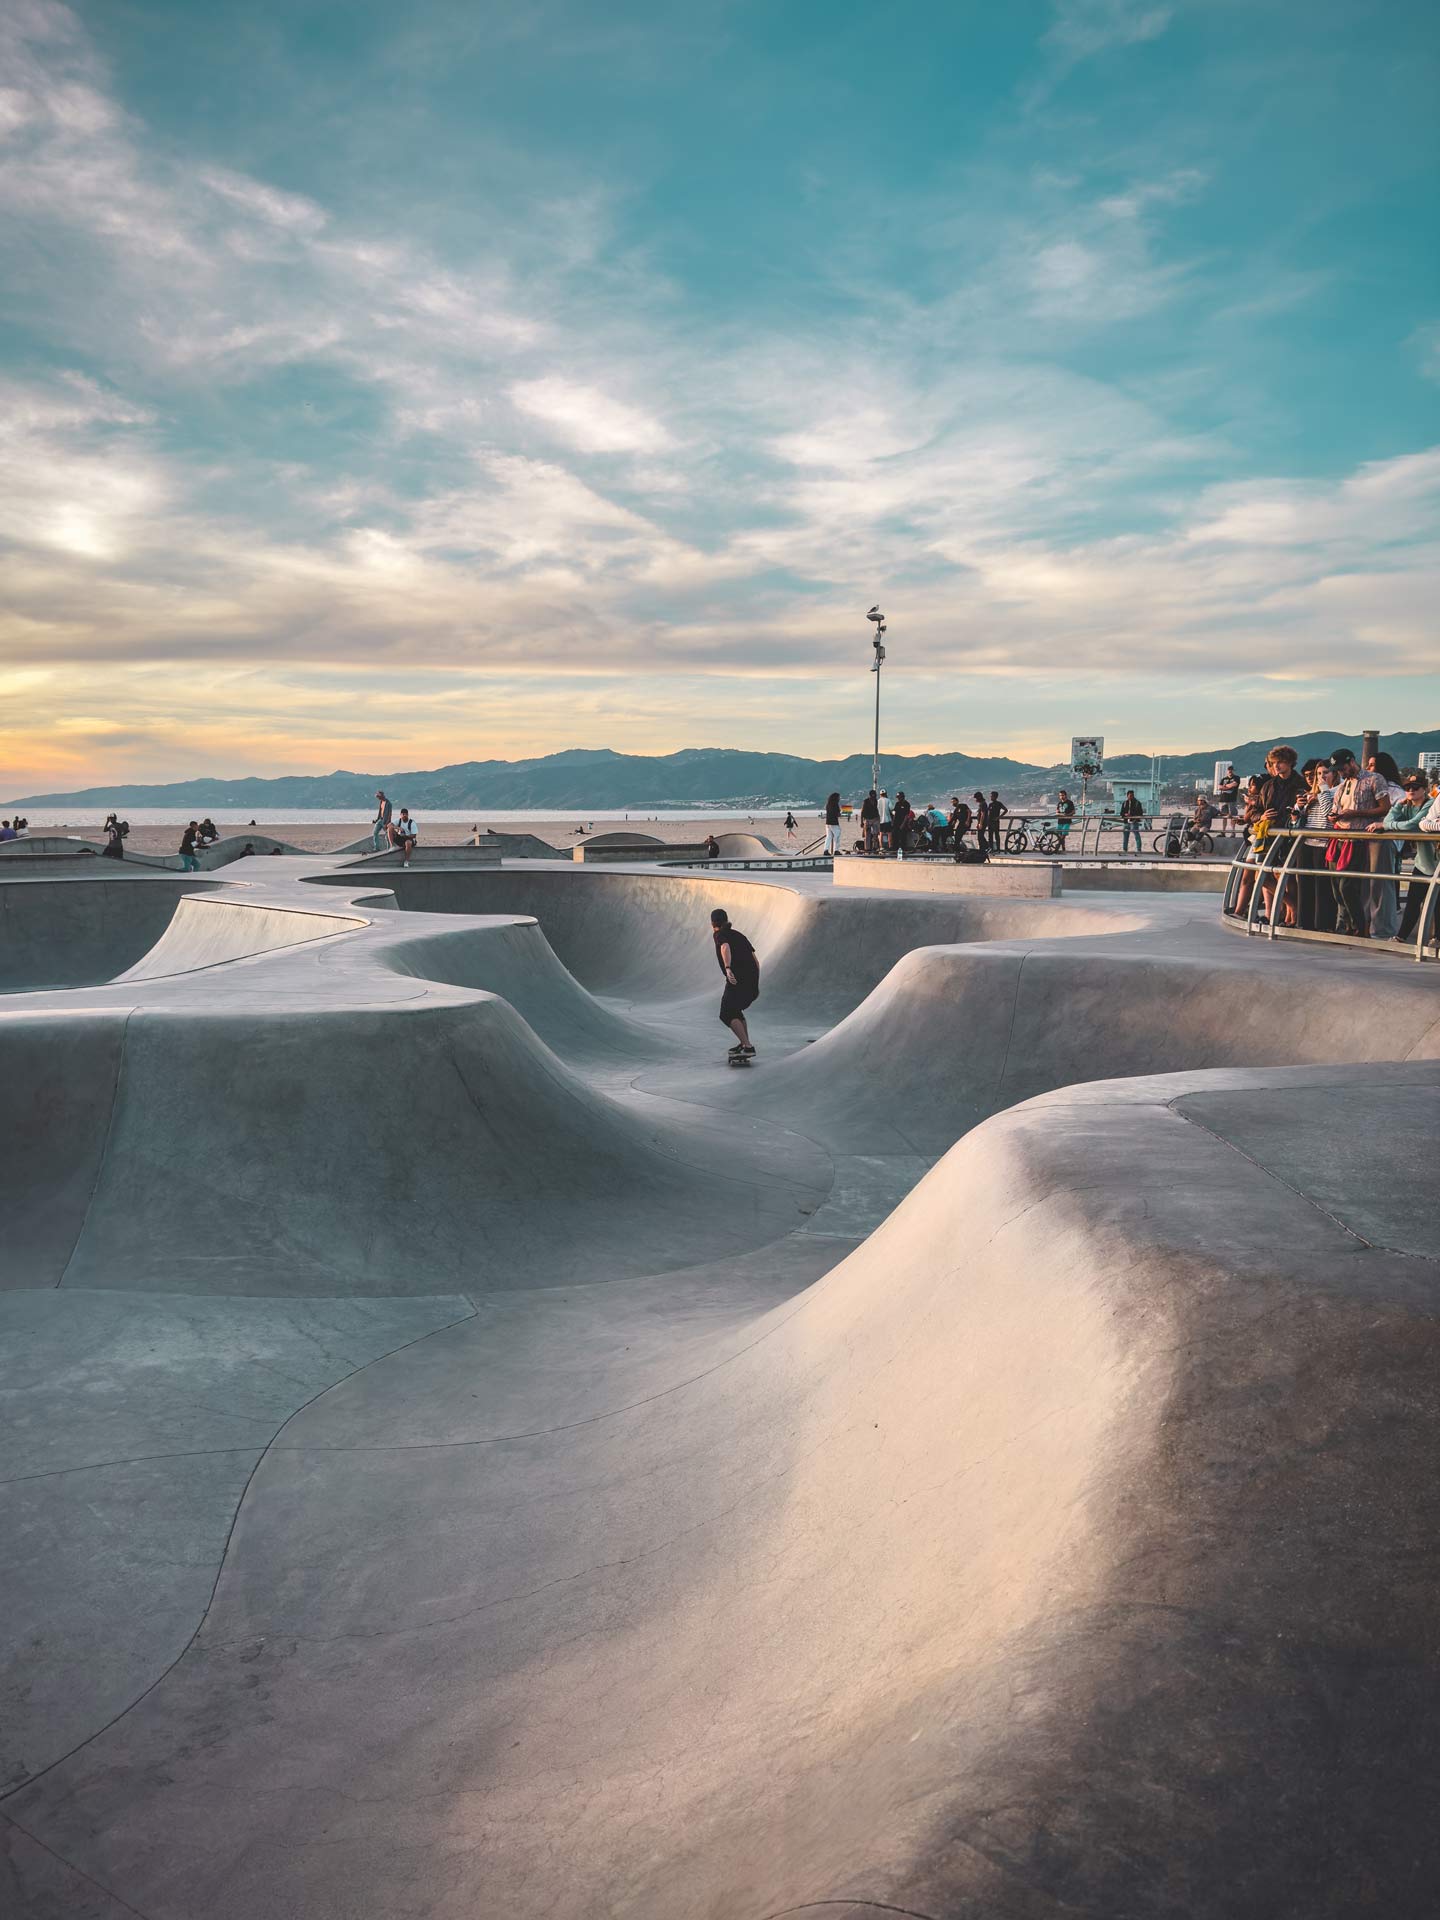 Venice-Beach-Skate-Park-Los-Angeles-California-sunset